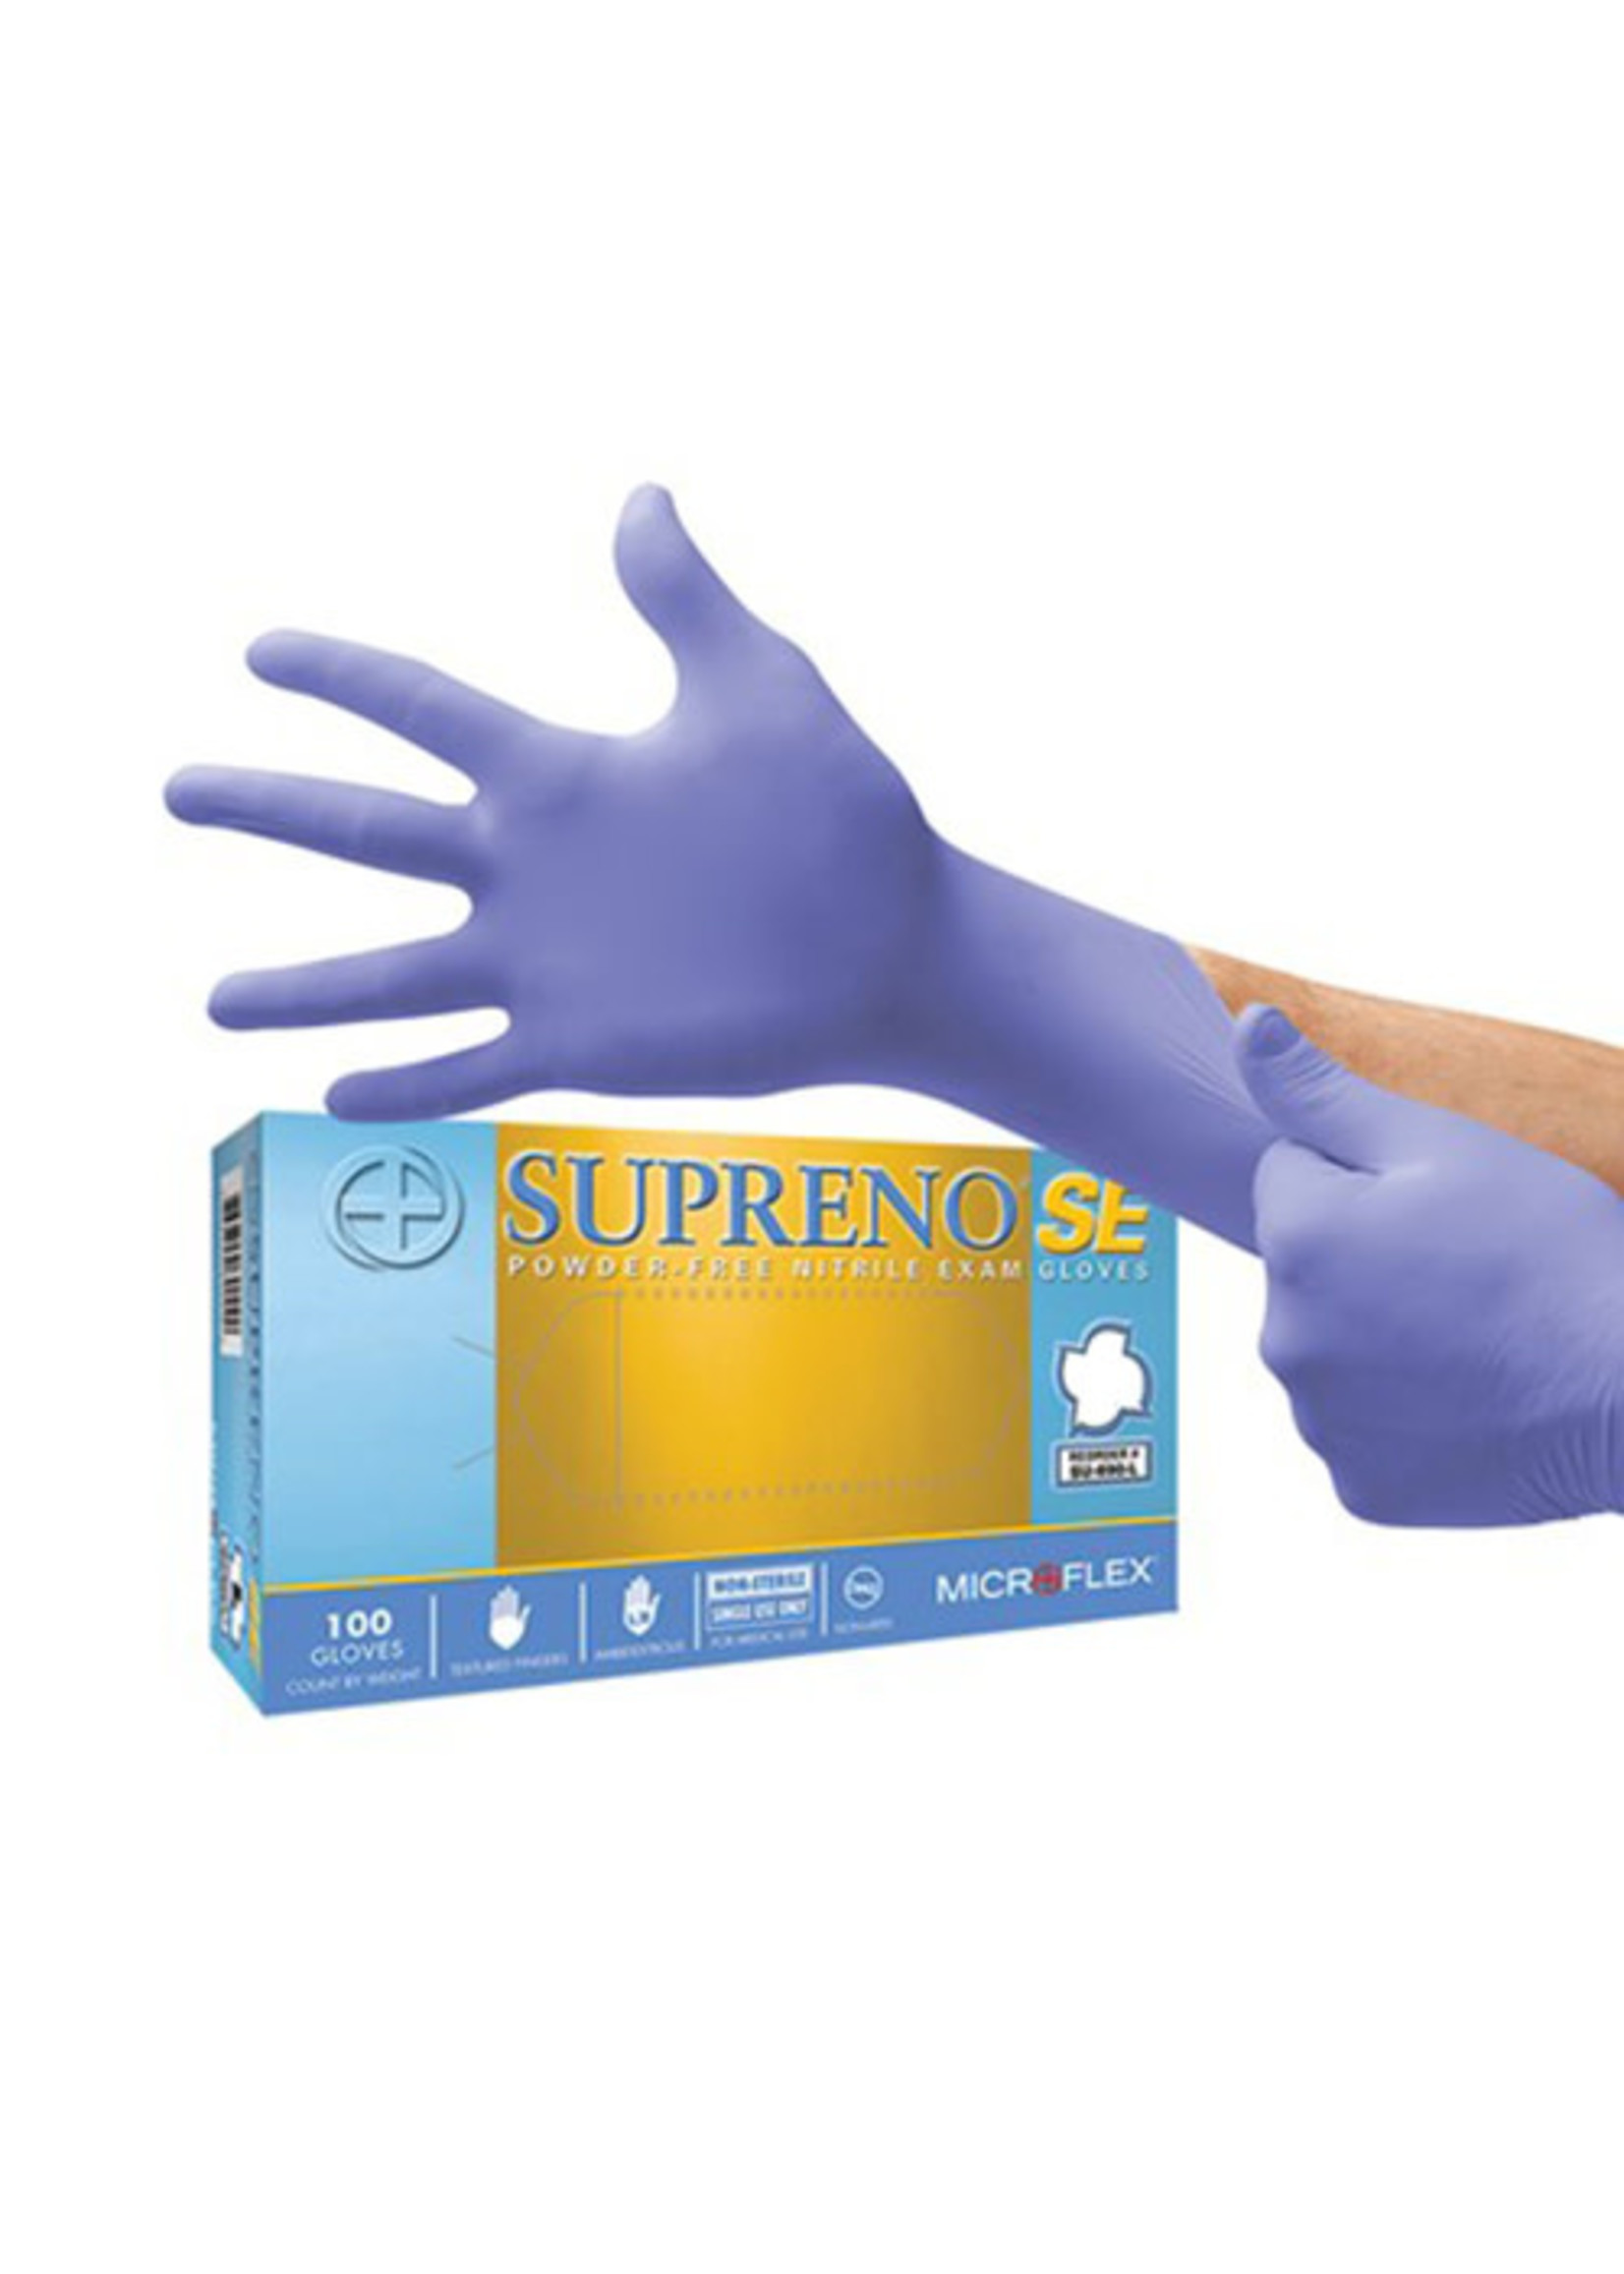 Exam Gloves XS - Supreno SE Purple